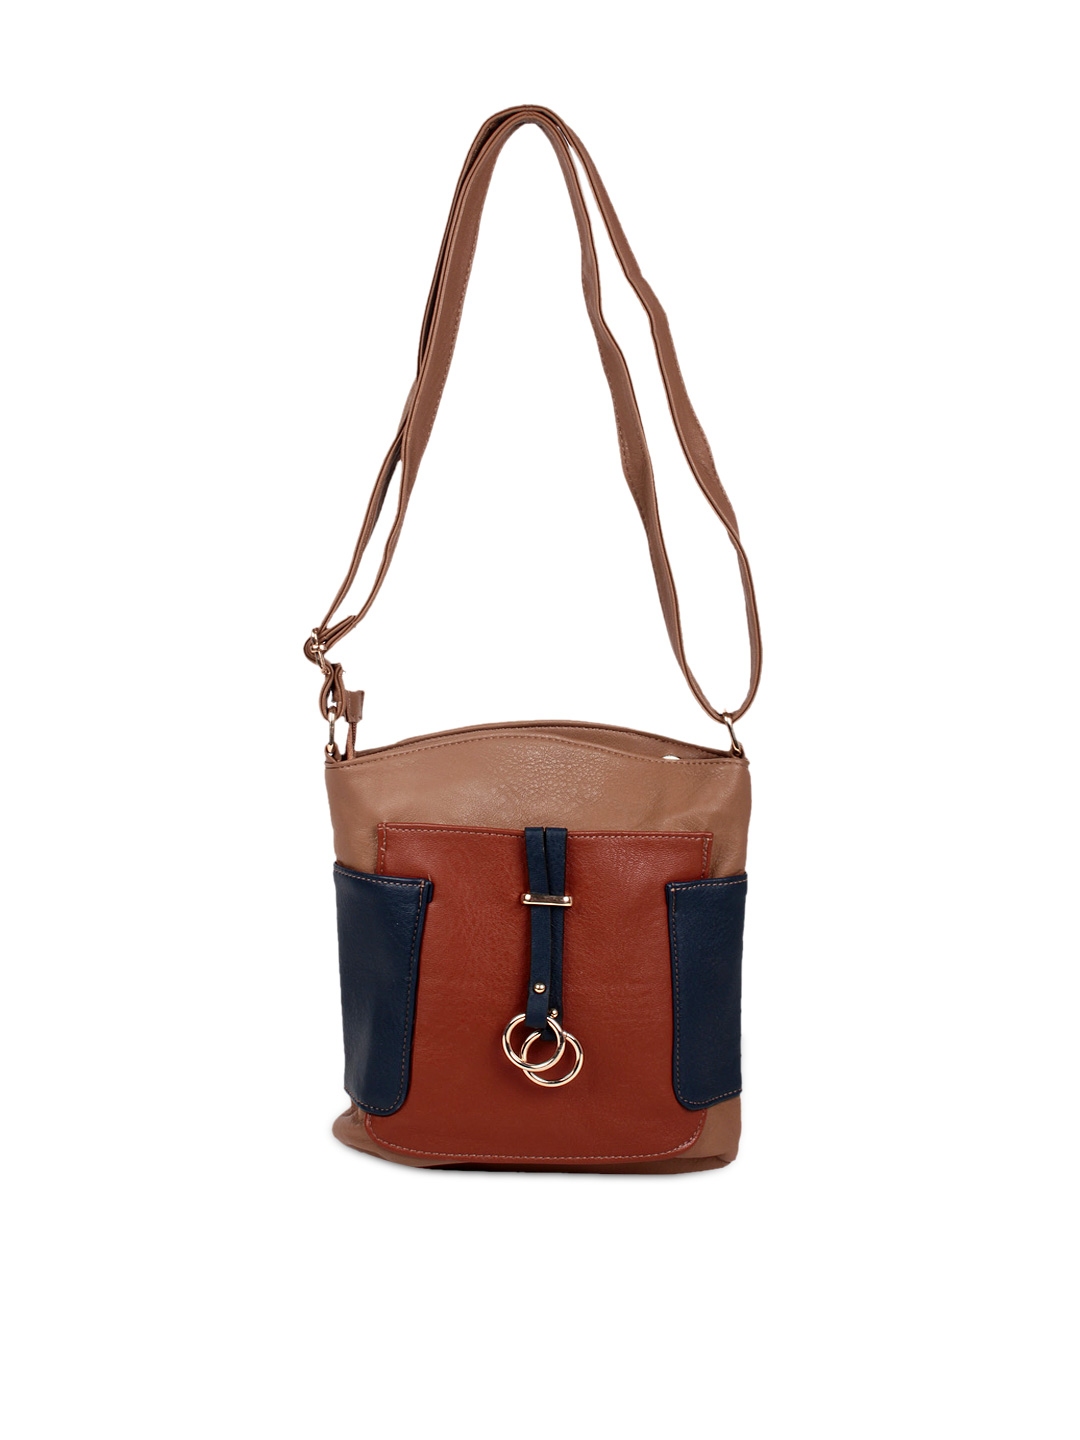 Buy TrendBerry Brown Sling Bag - Handbags for Women 1154405 | Myntra